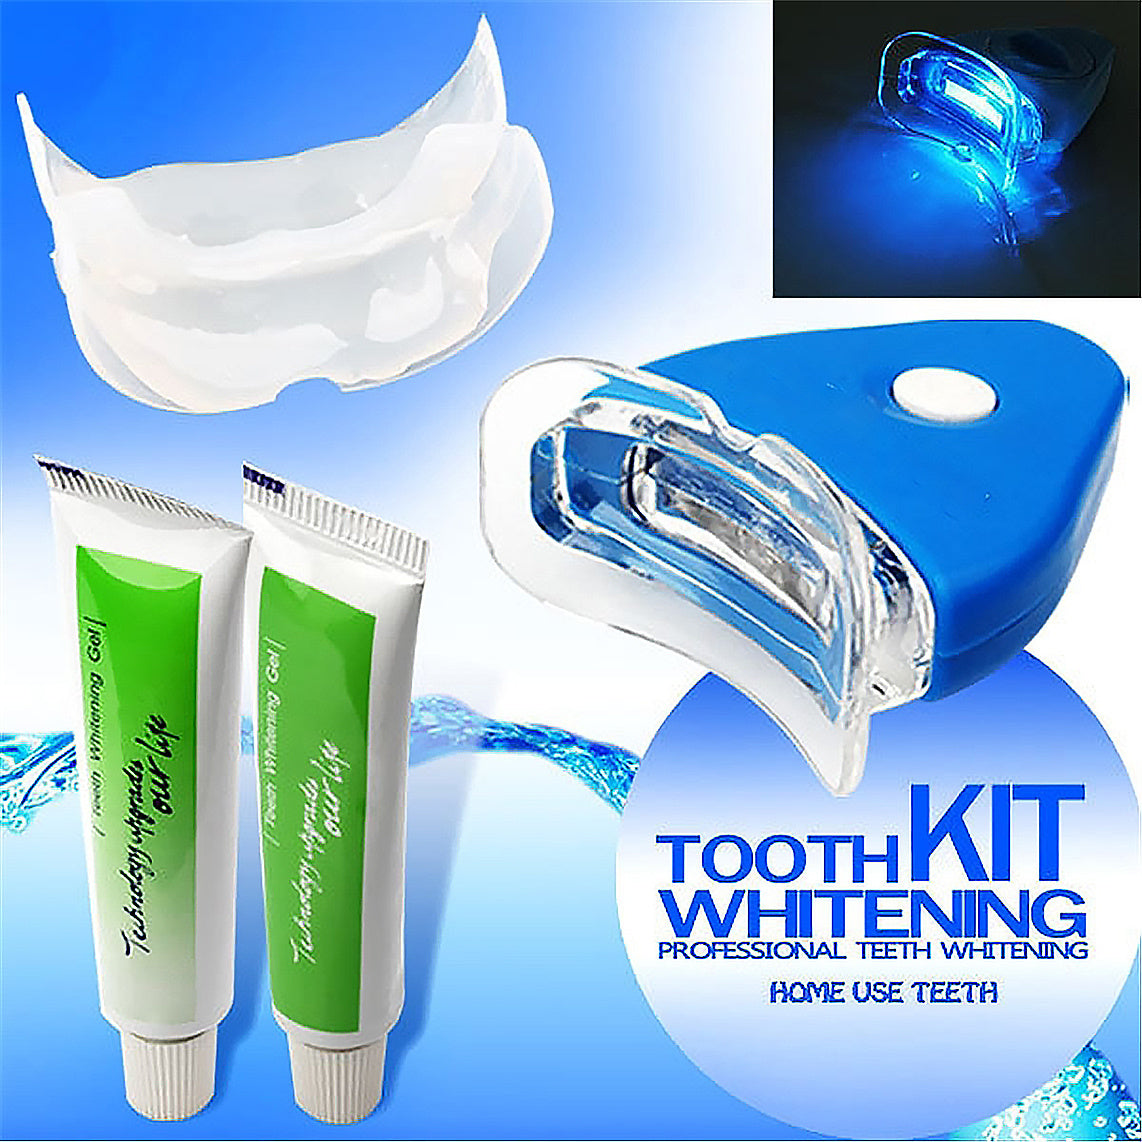 Brilliant Smile: Oral Gel Teeth Whitening Kit with LED Dental Bleaching Technology